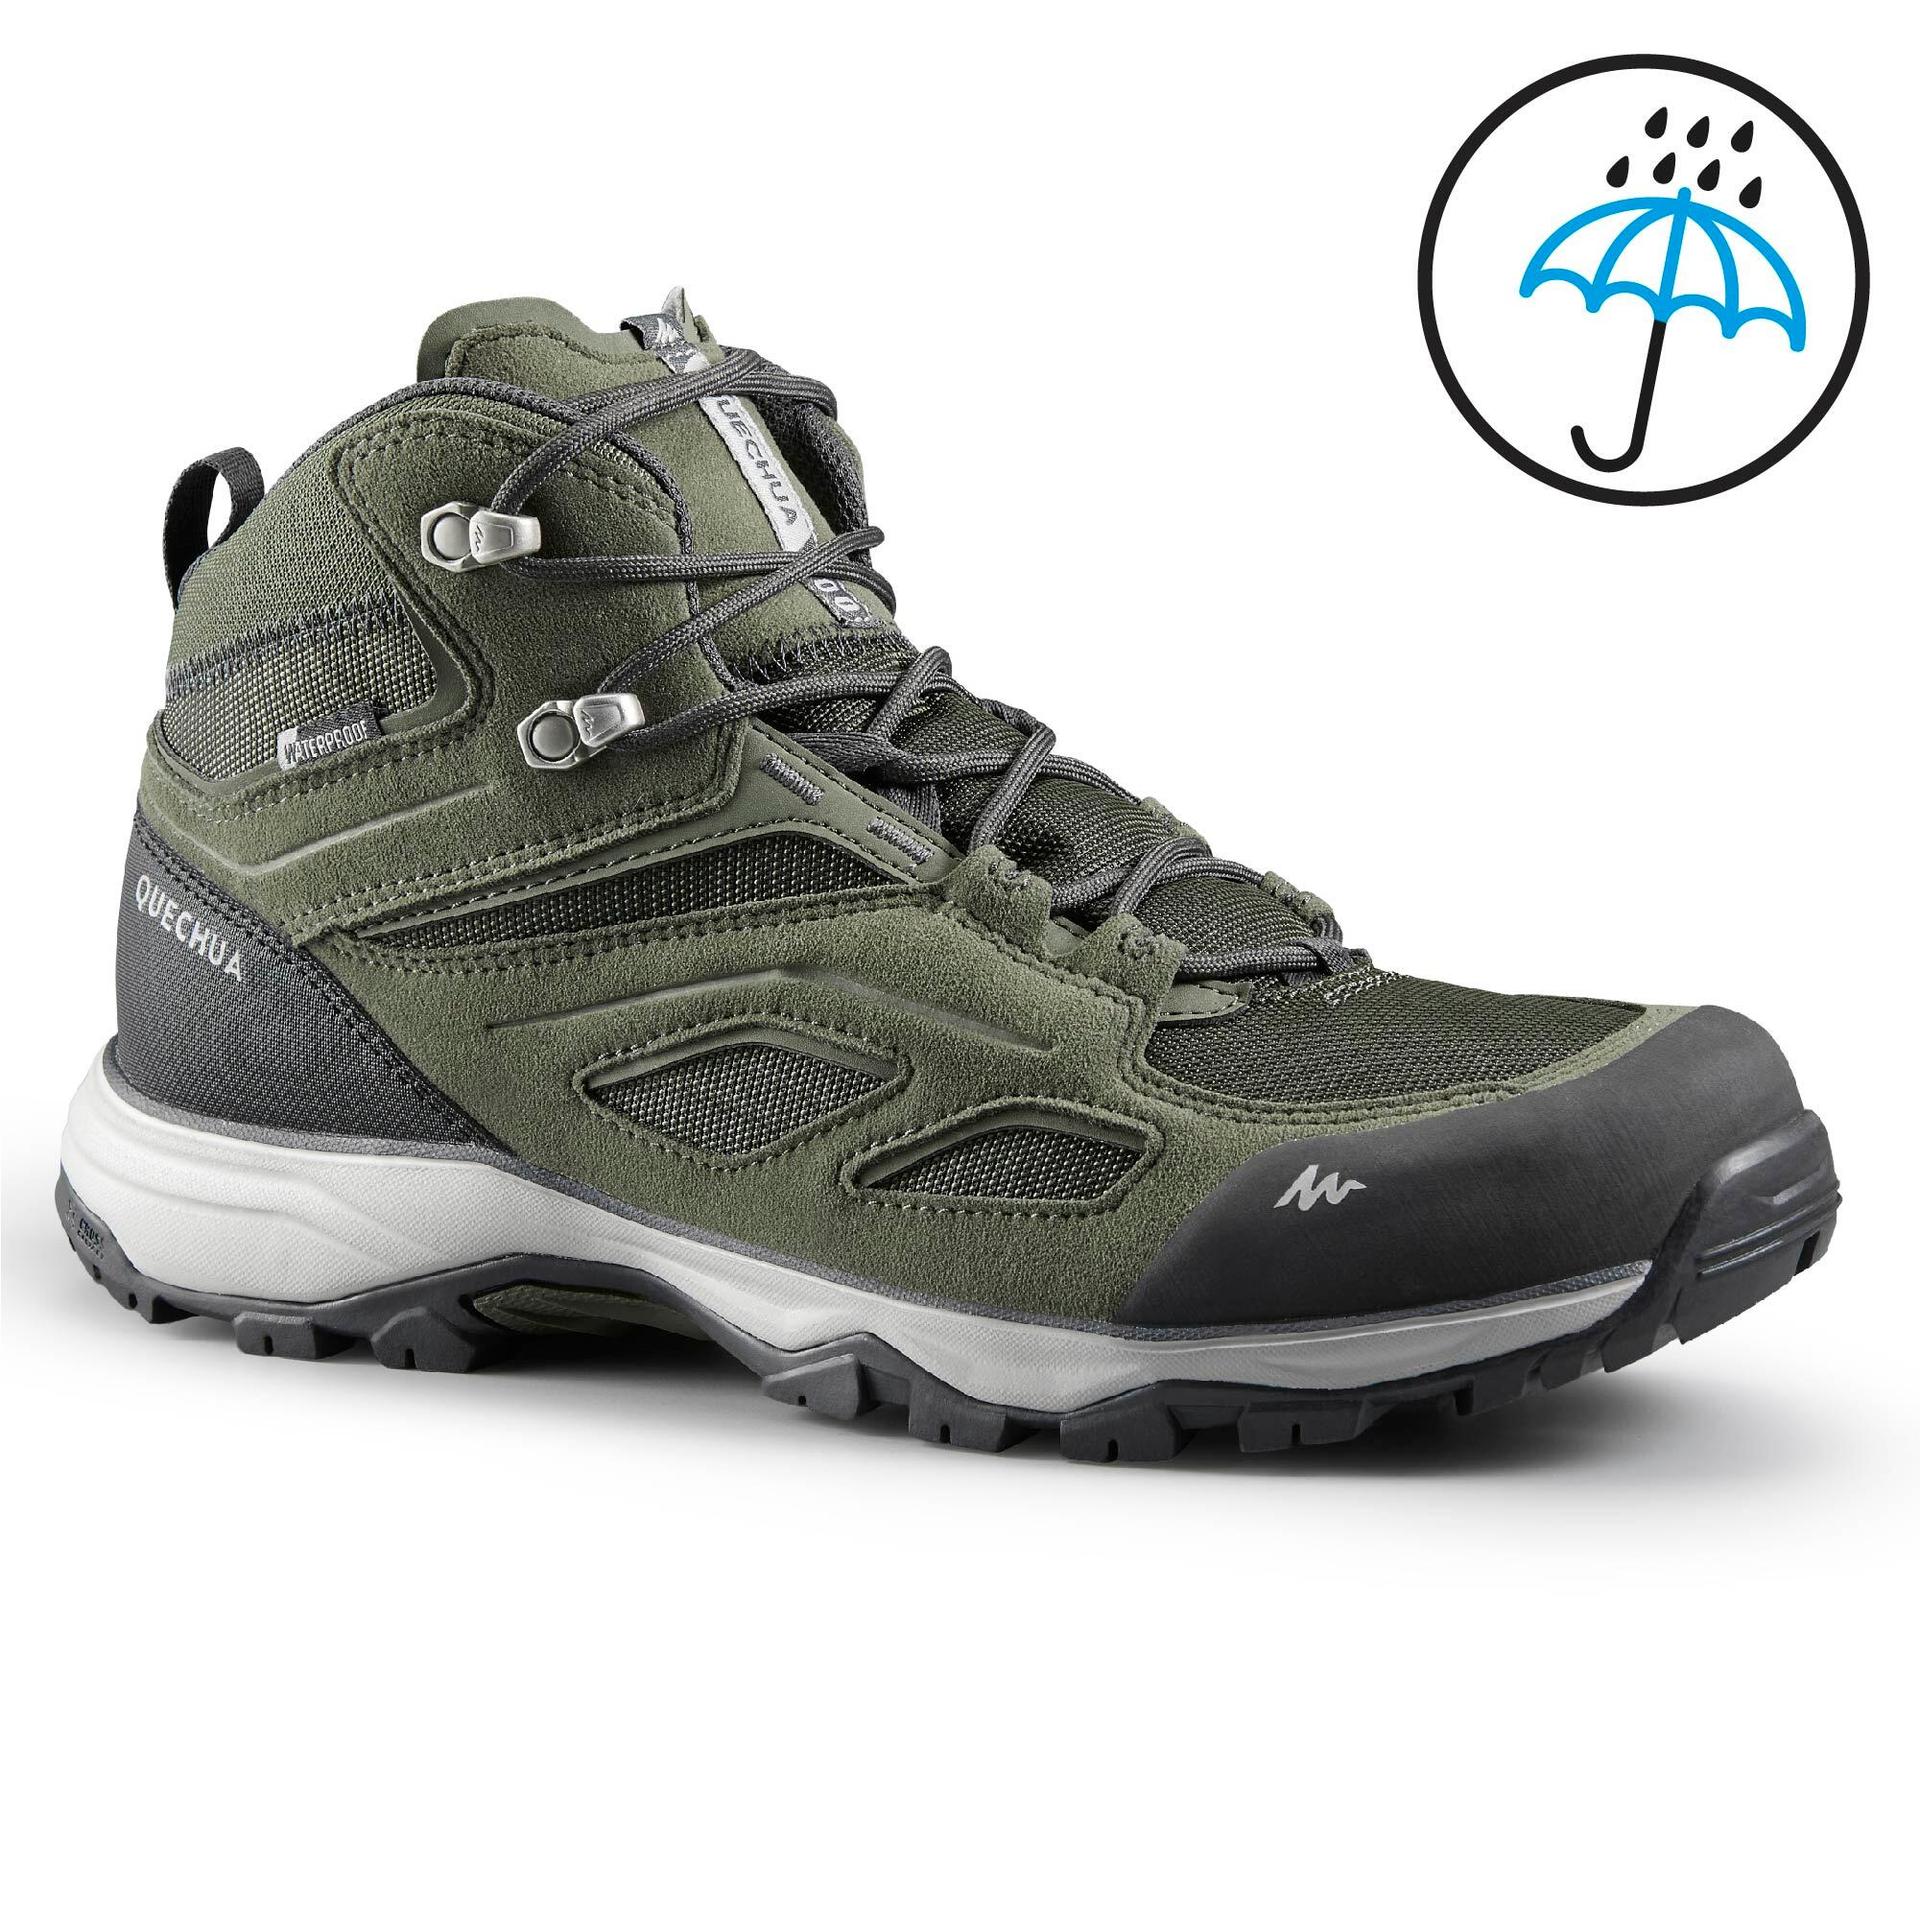 men's hiking shoes (waterproof) mh100 - khaki